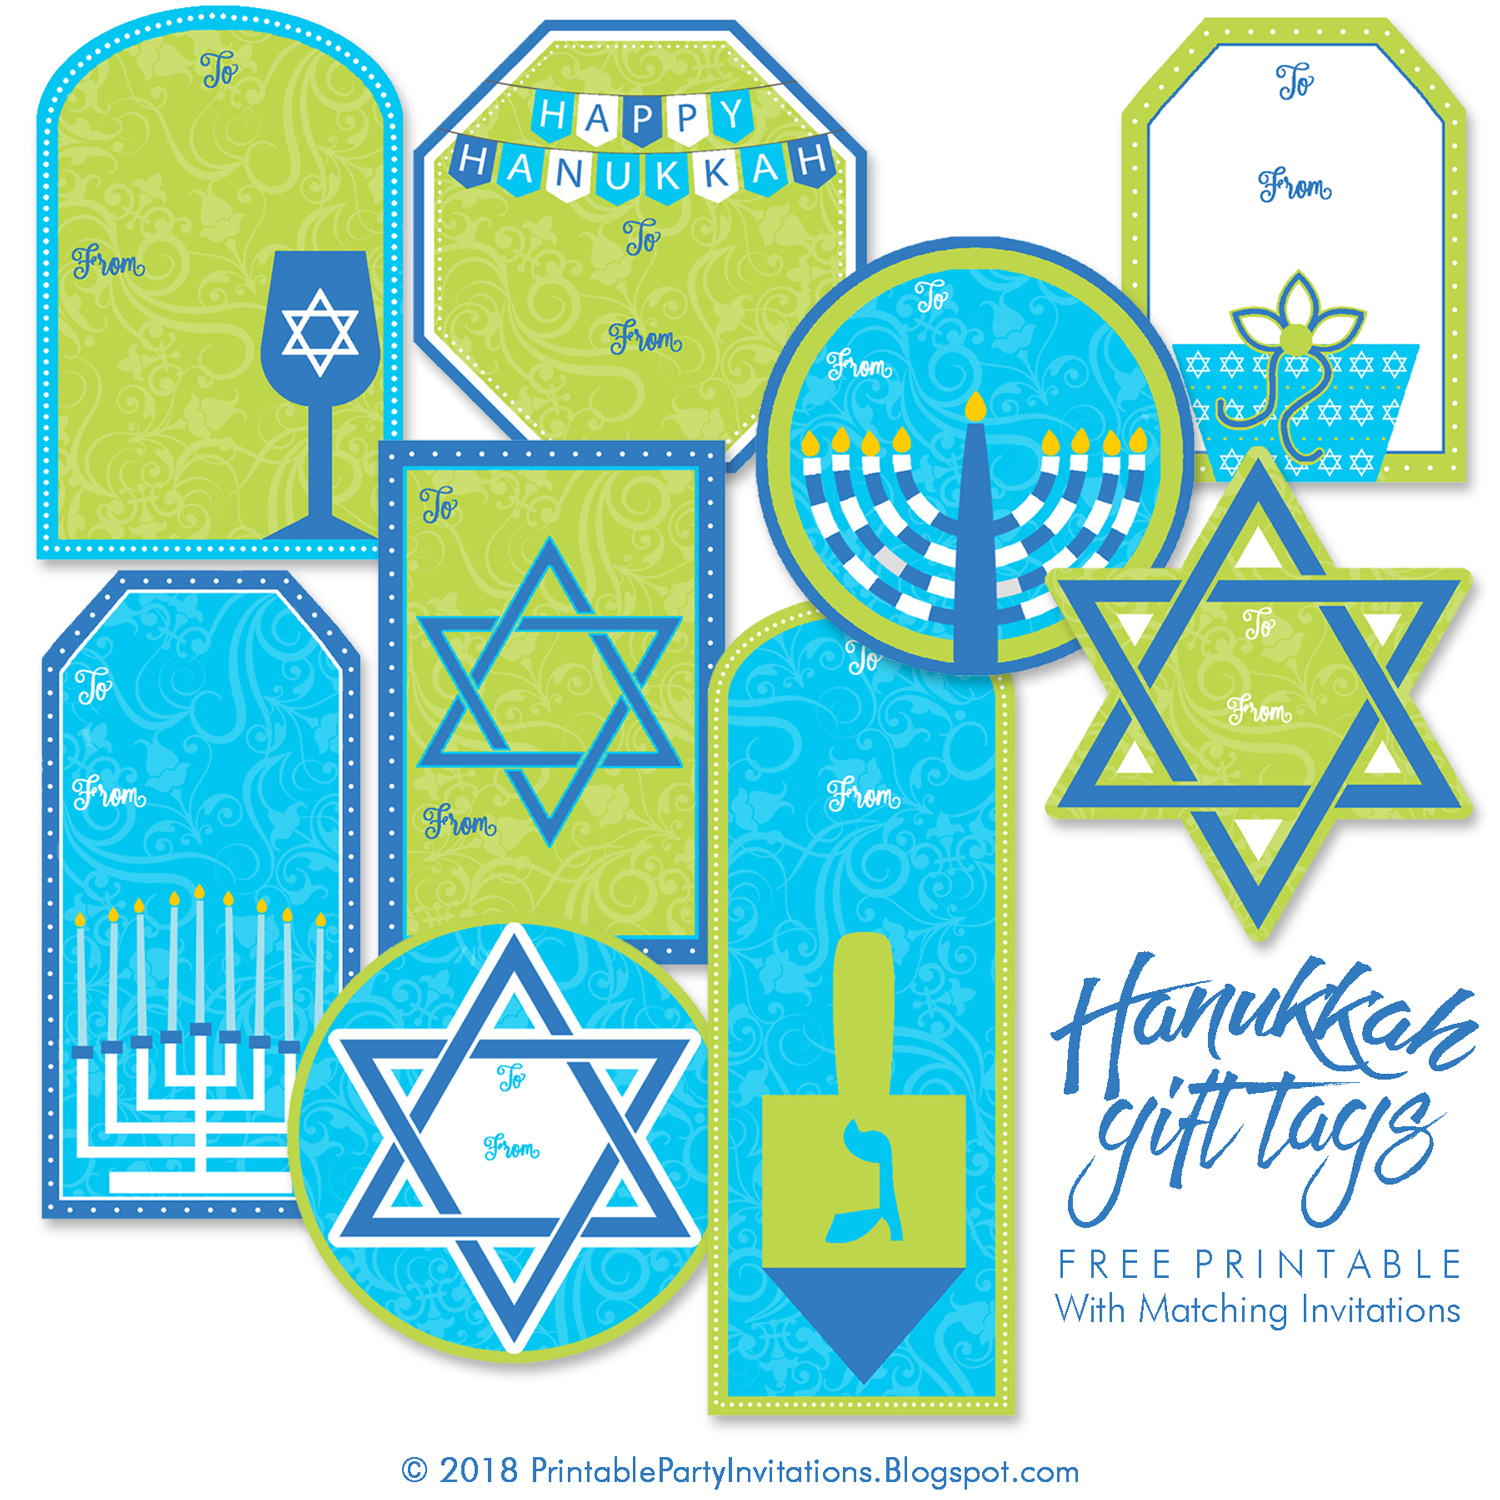 free-hanukkah-gift-tags-free-printable-party-invitations